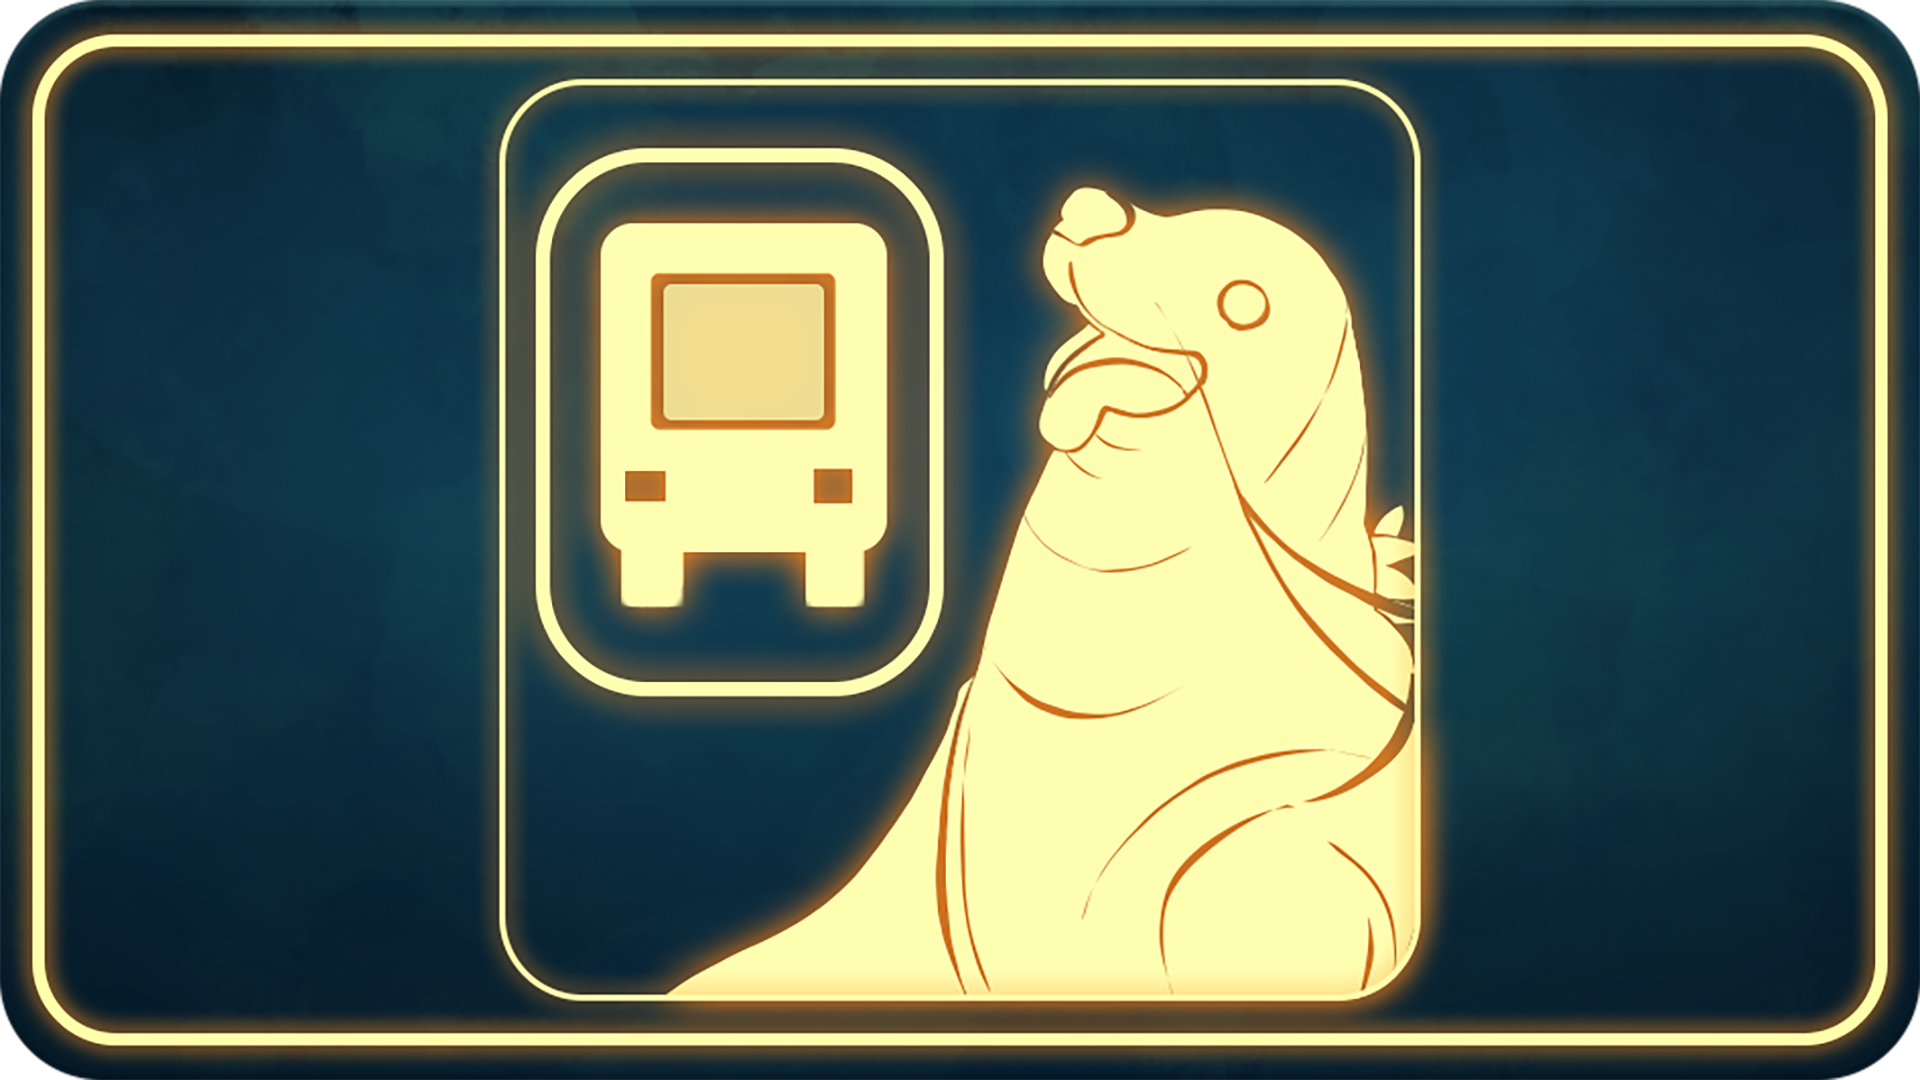 Icon for Public Transportation